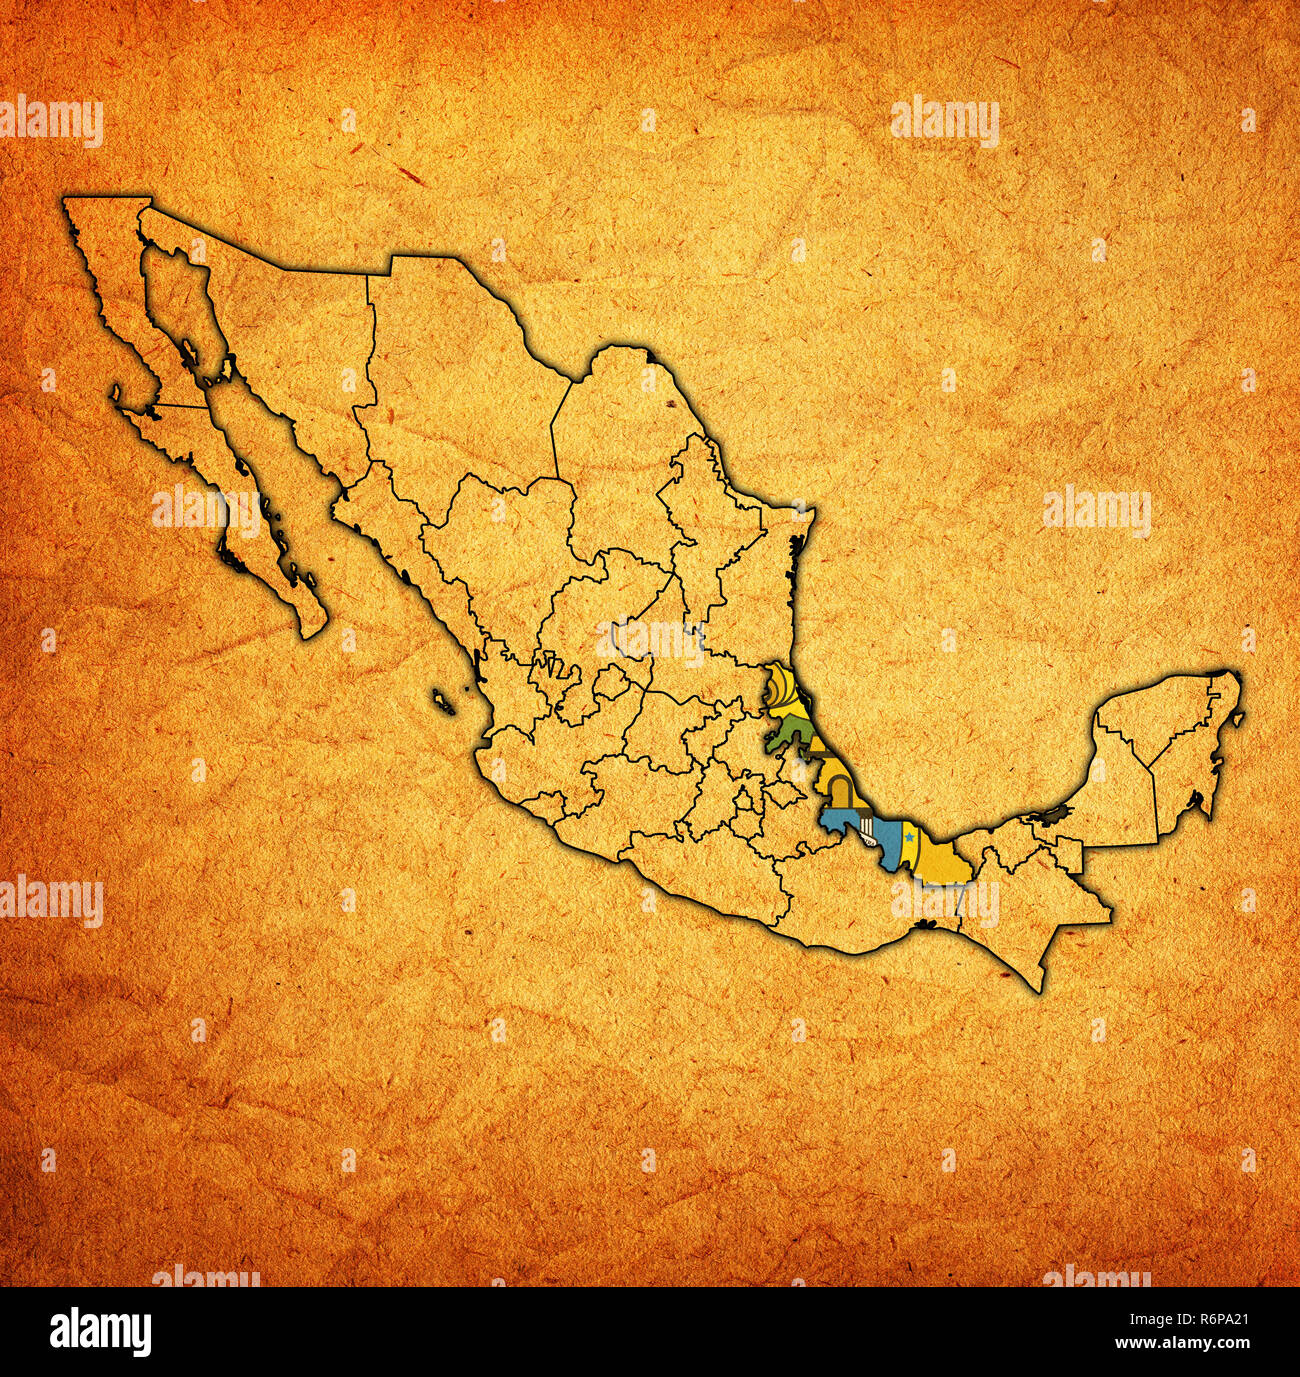 Veracruz on administration map of Mexico Stock Photo